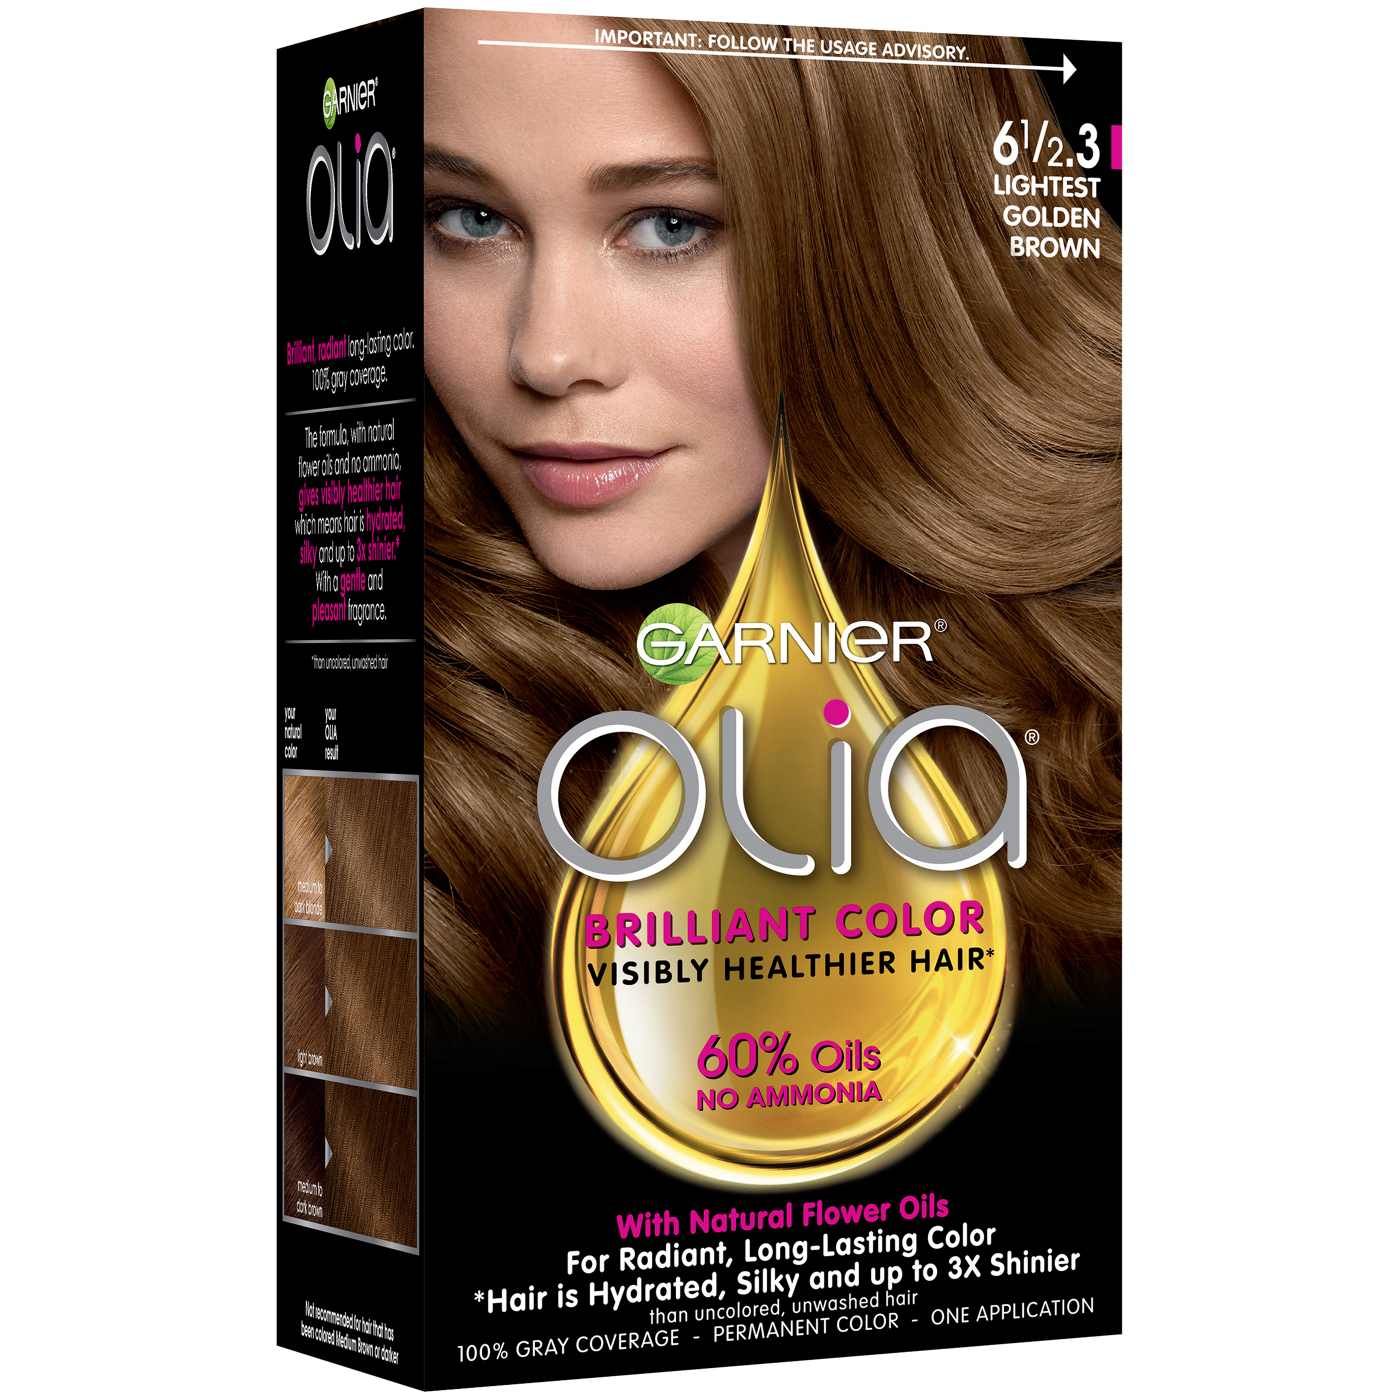 Garnier Olia Oil Powered Ammonia Free Permanent Hair Color 6 1/2.3 Lightest Golden Brown; image 1 of 12